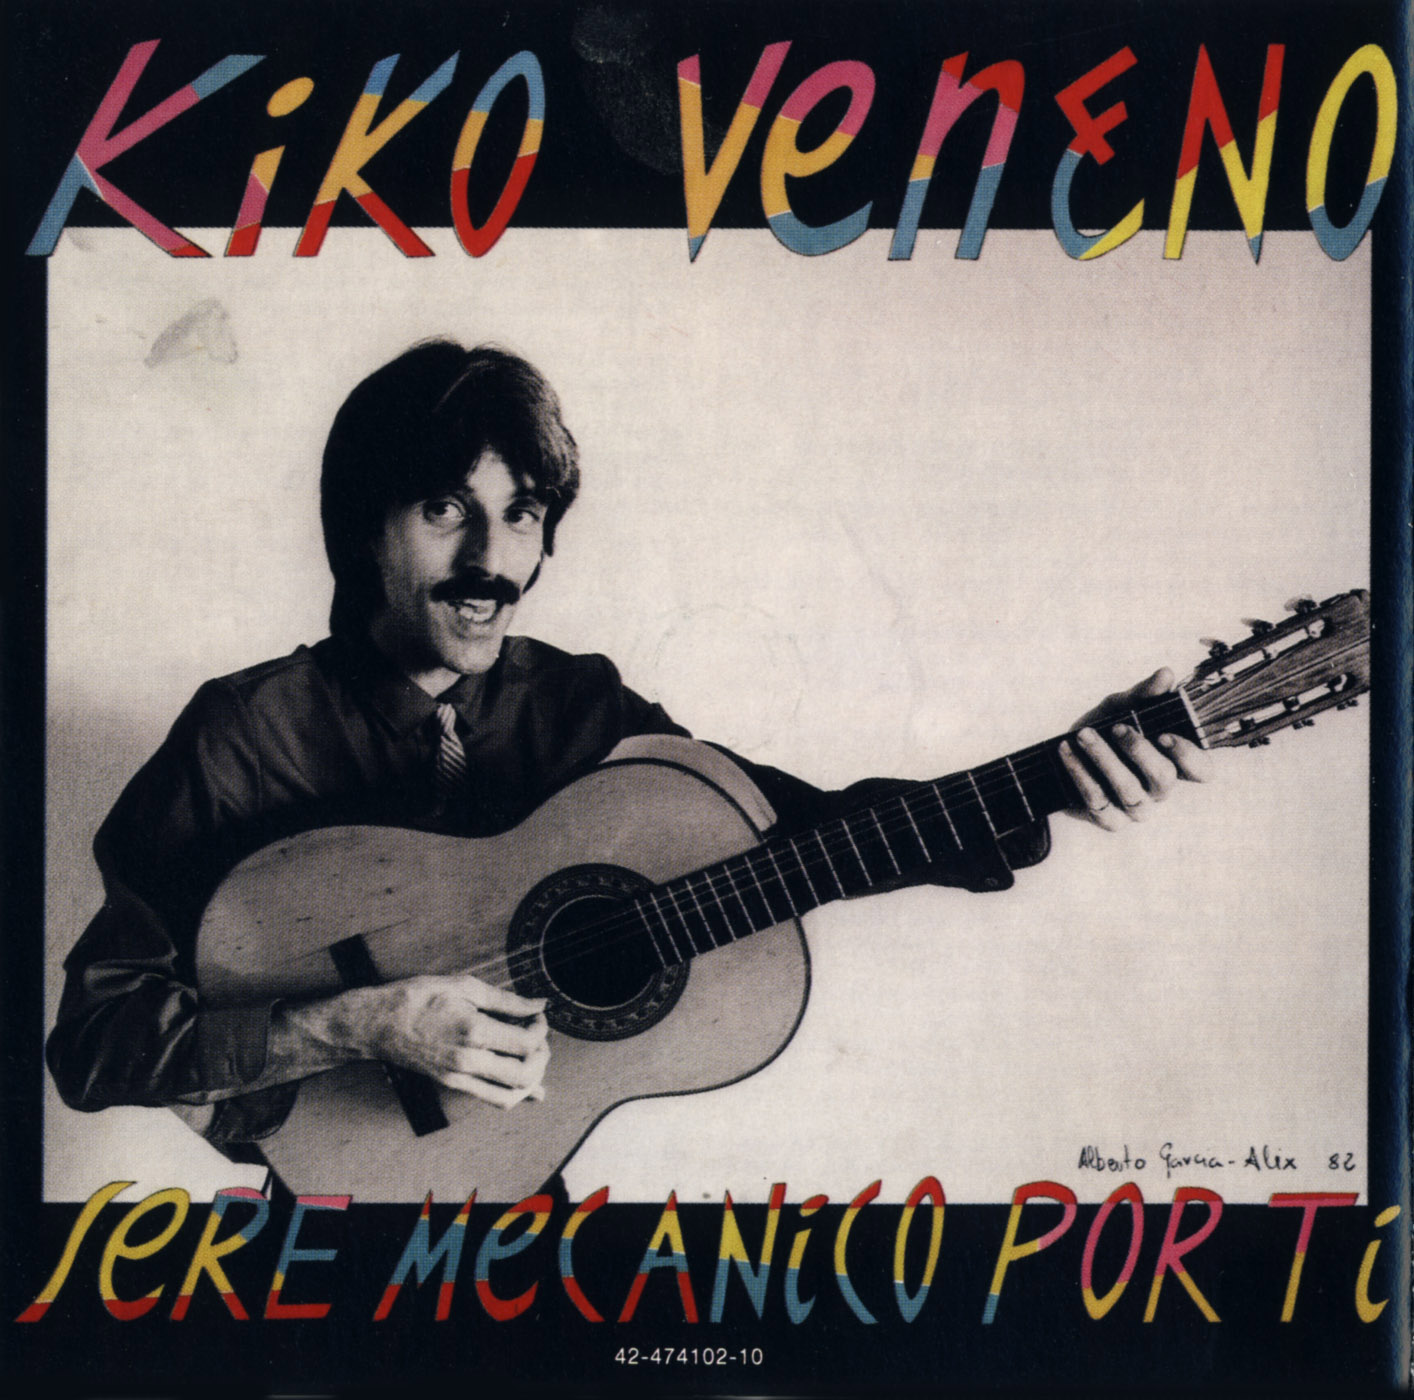 El mejor disco de la historia (según Popuheads) - Página 8 Kiko+Veneno+Sere+mecanico+por+ti001